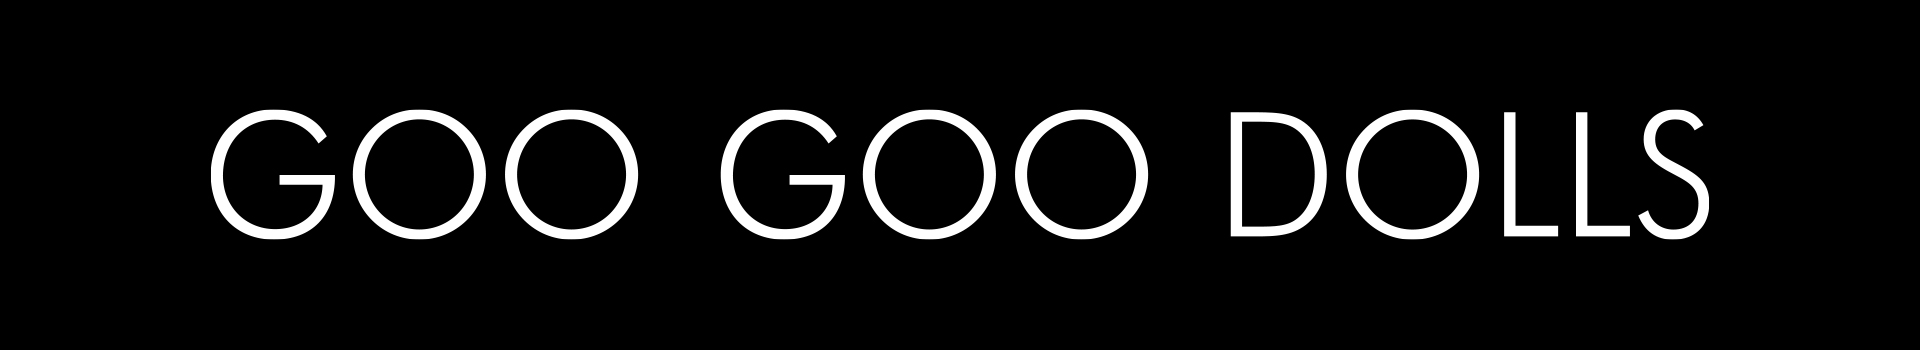 Goo Goo Dolls - Official Merchandise